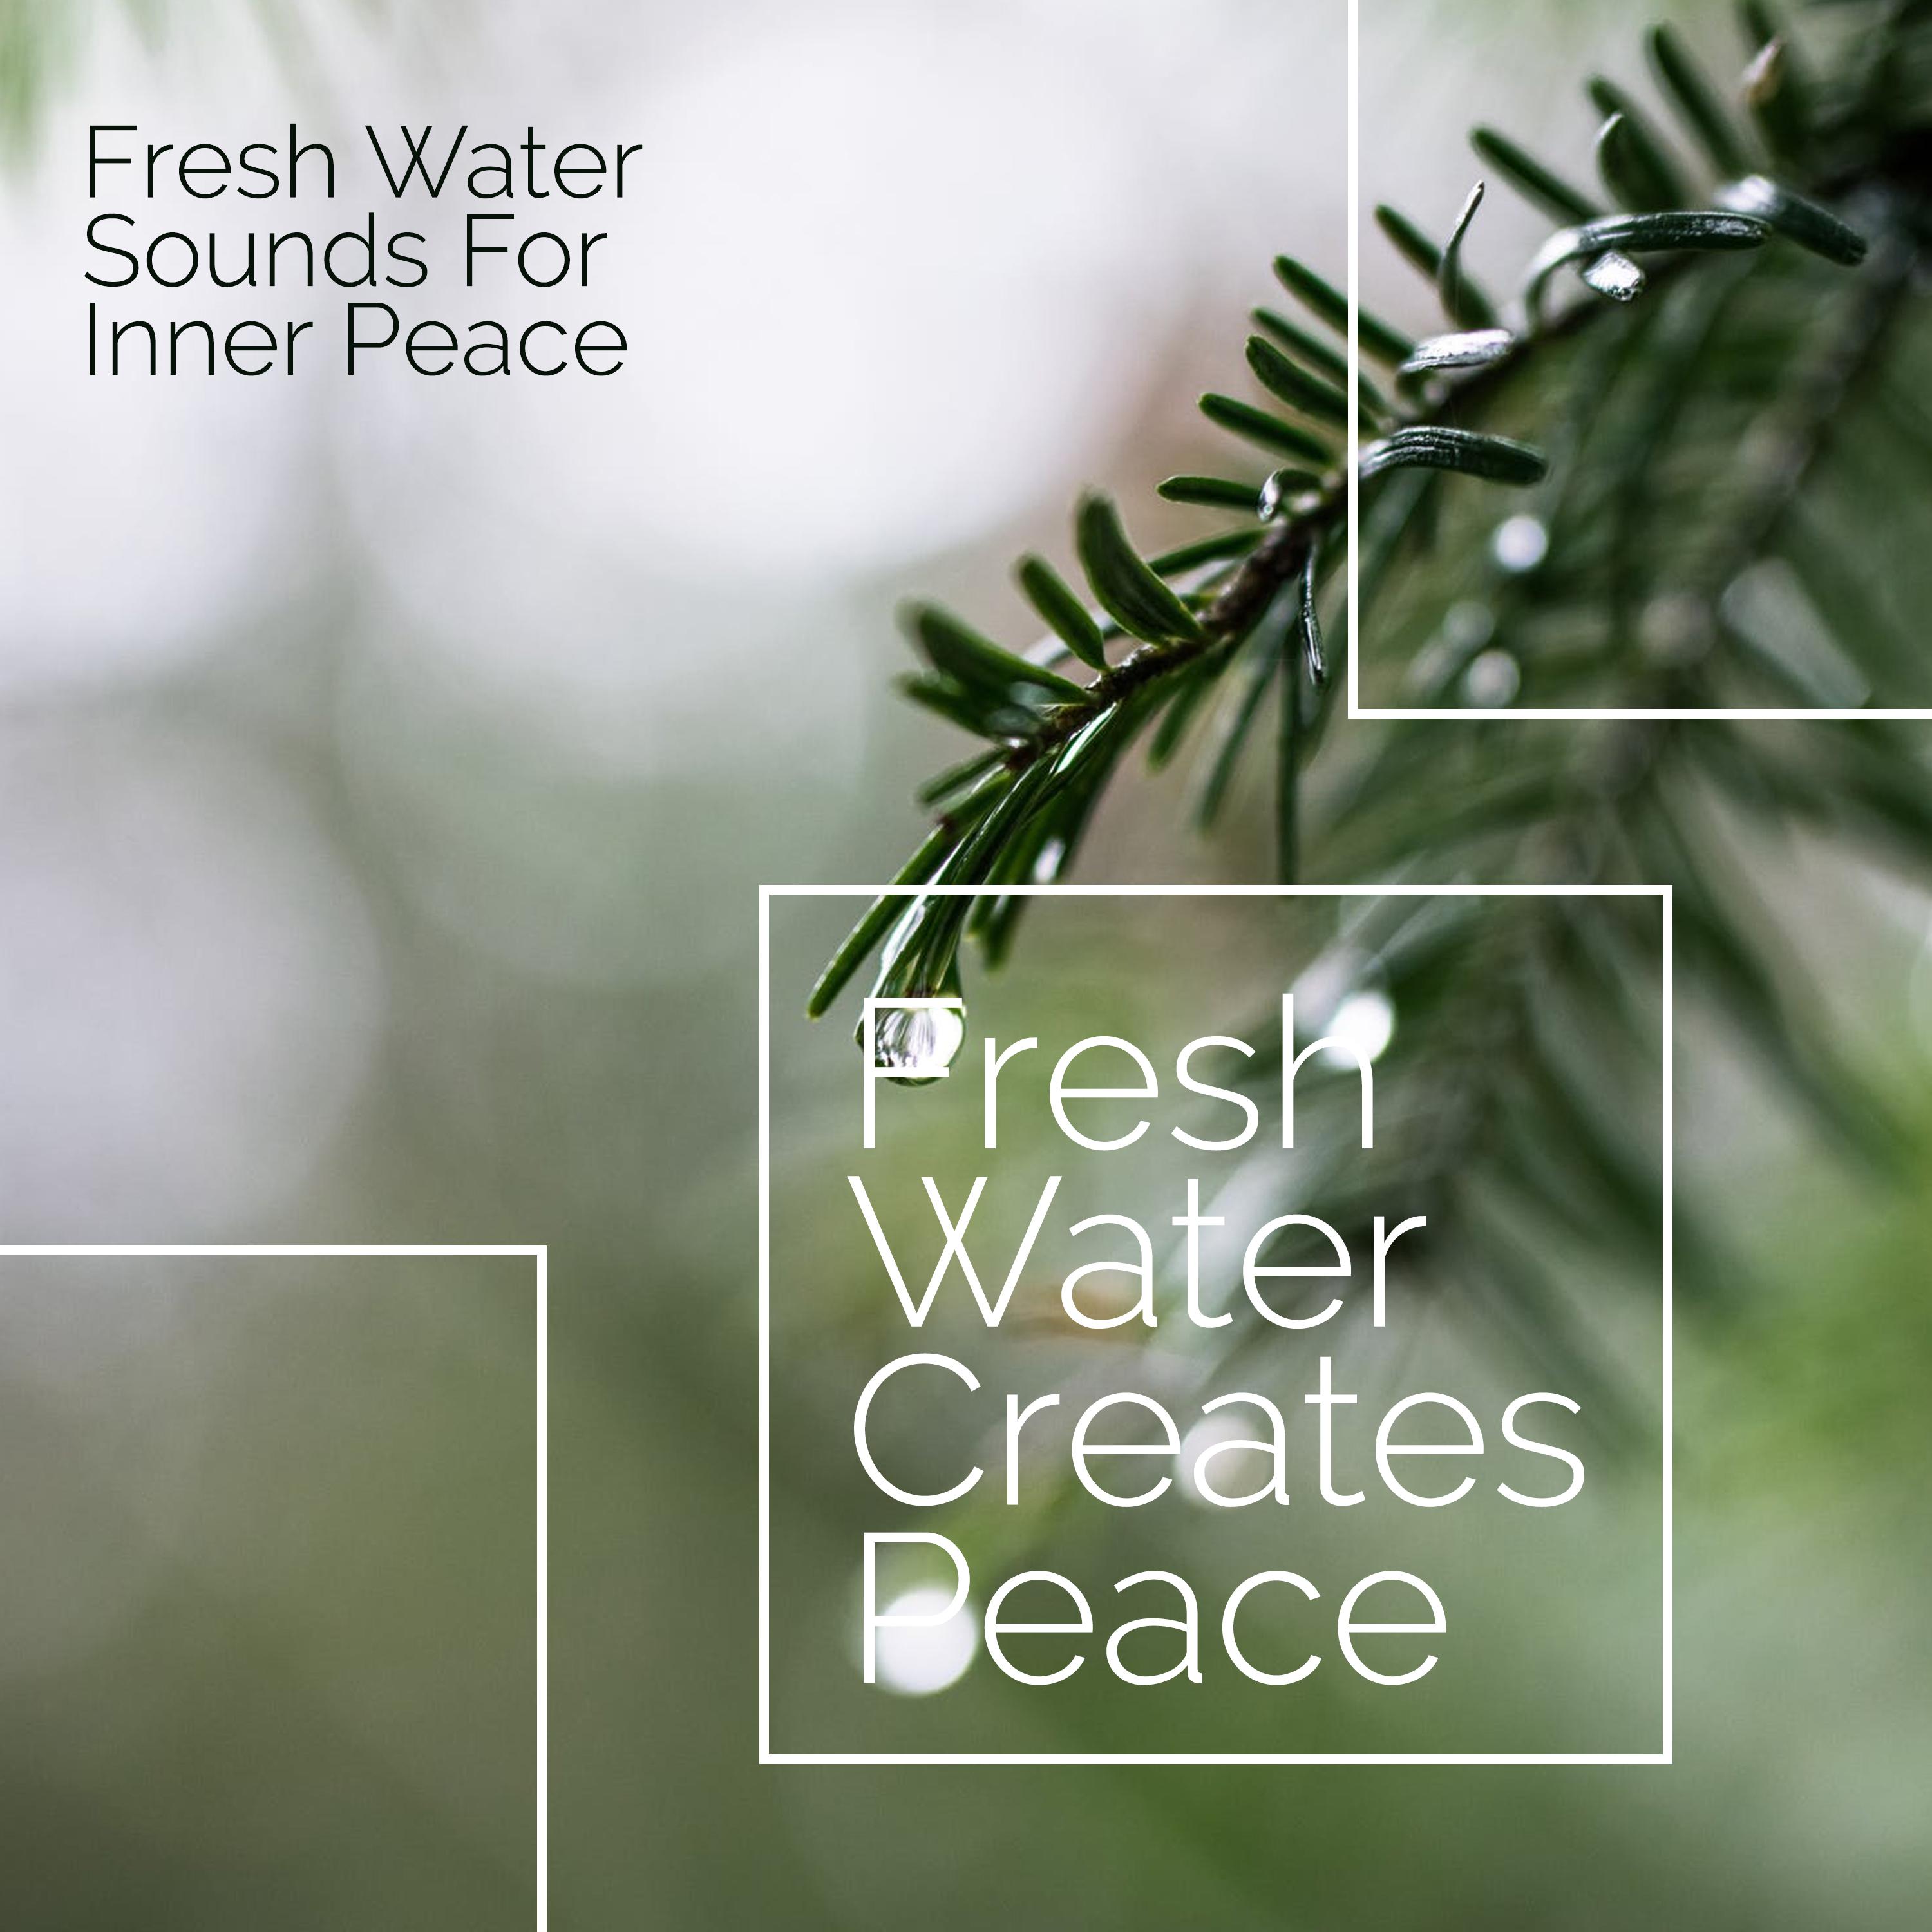 Fresh Water Creates Peace